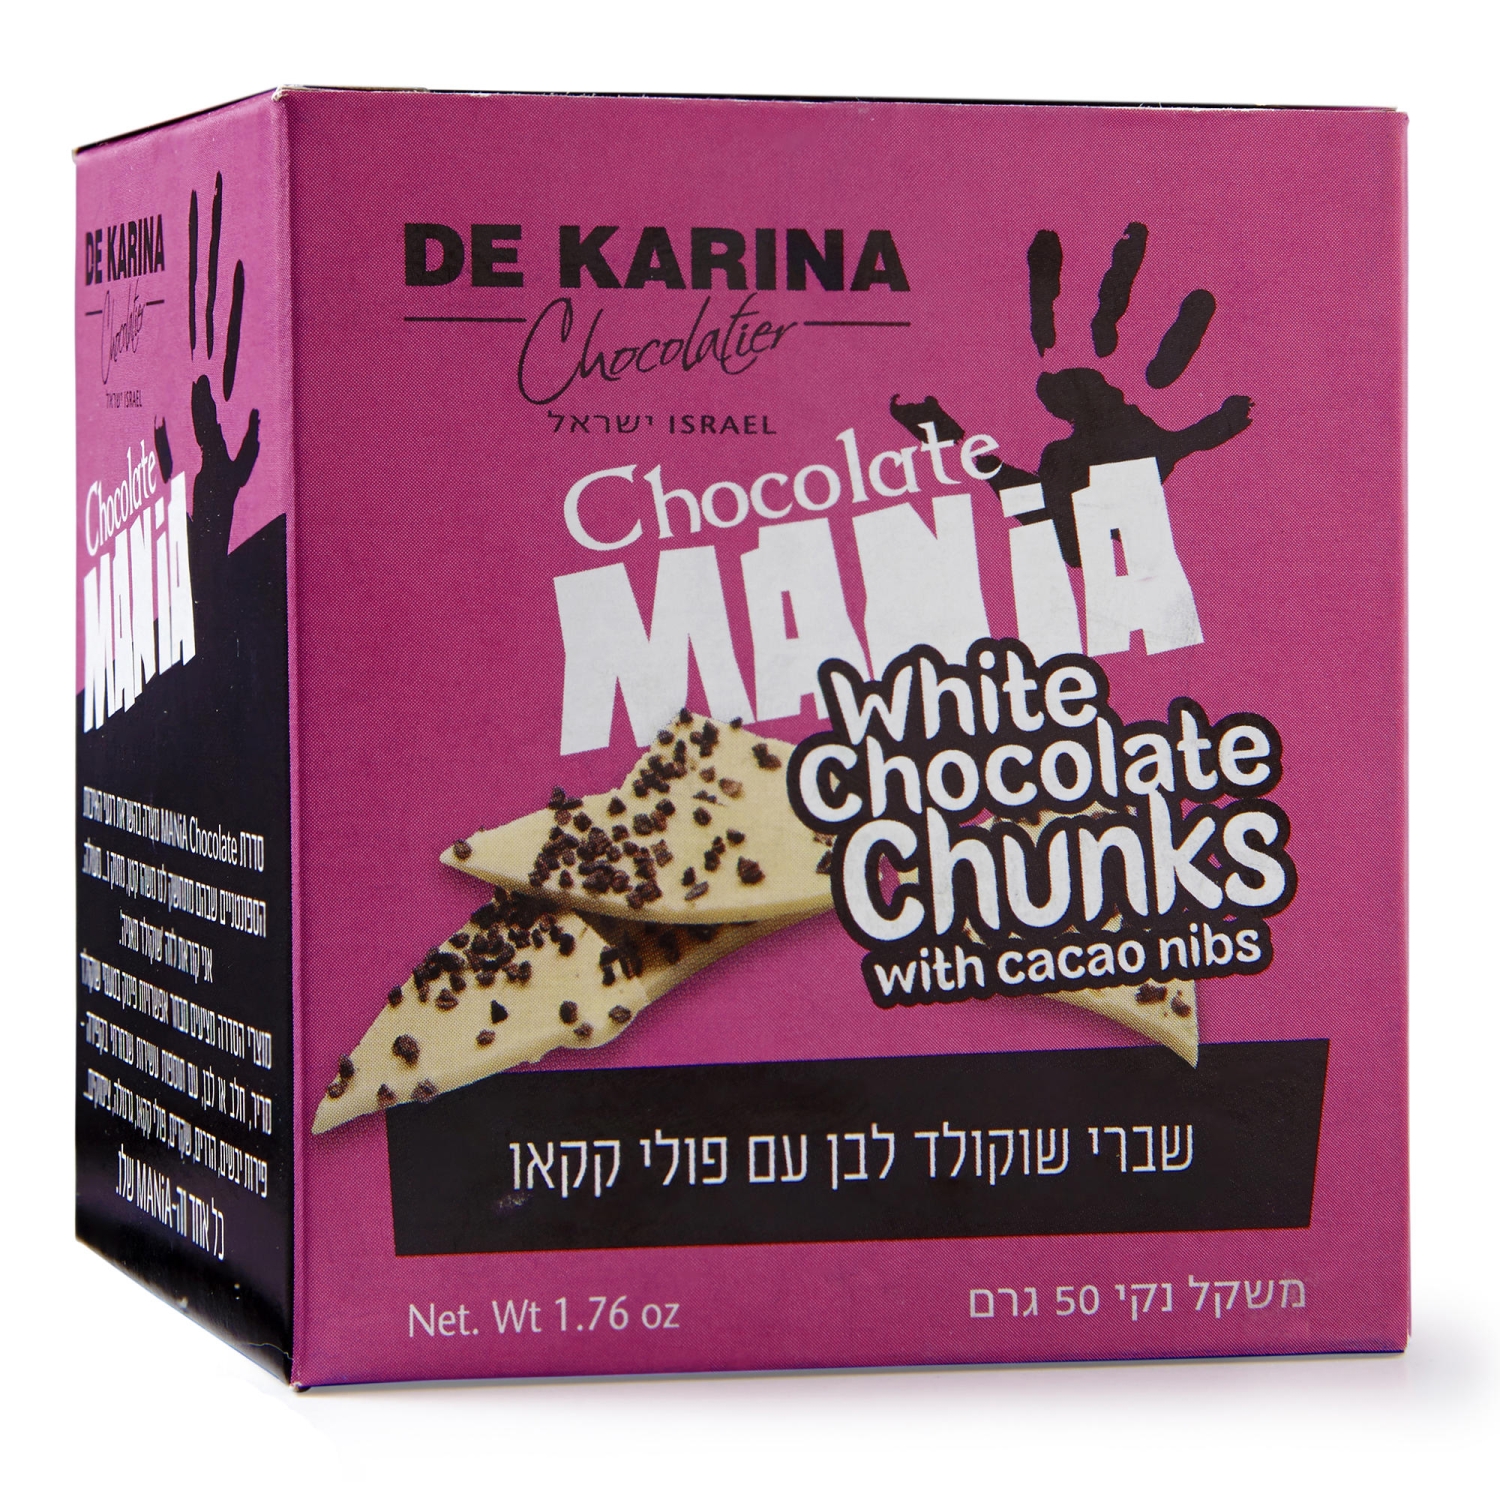 De Karina Chocolate Mania White Chocolate Chunks - 1